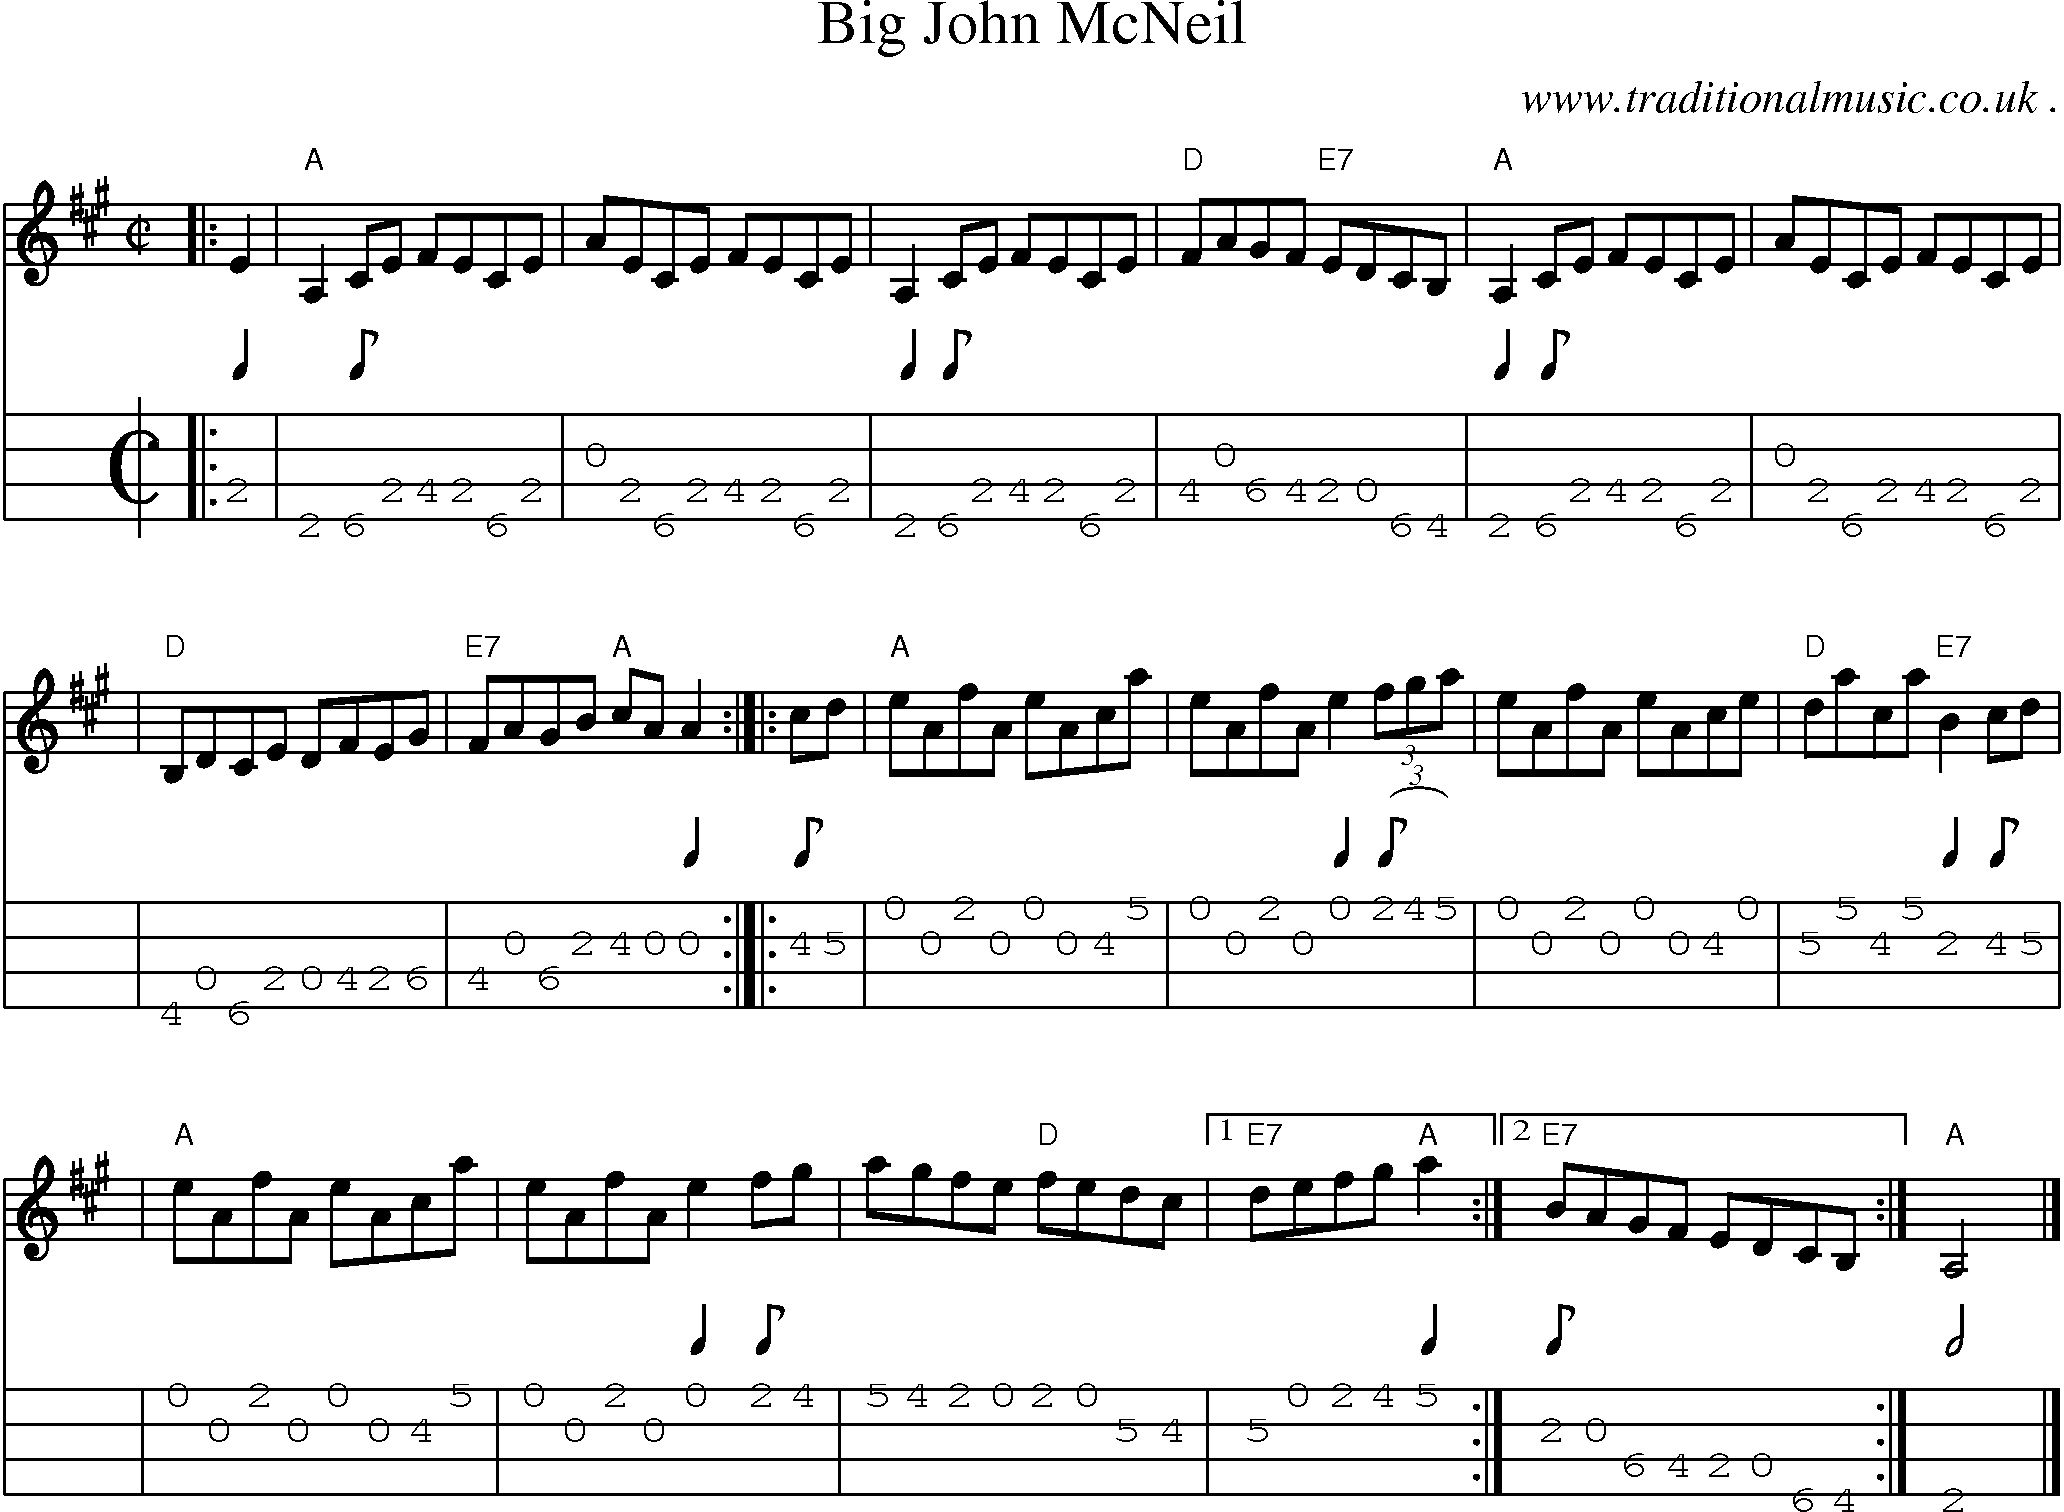 Sheet-music  score, Chords and Mandolin Tabs for Big John Mcneil